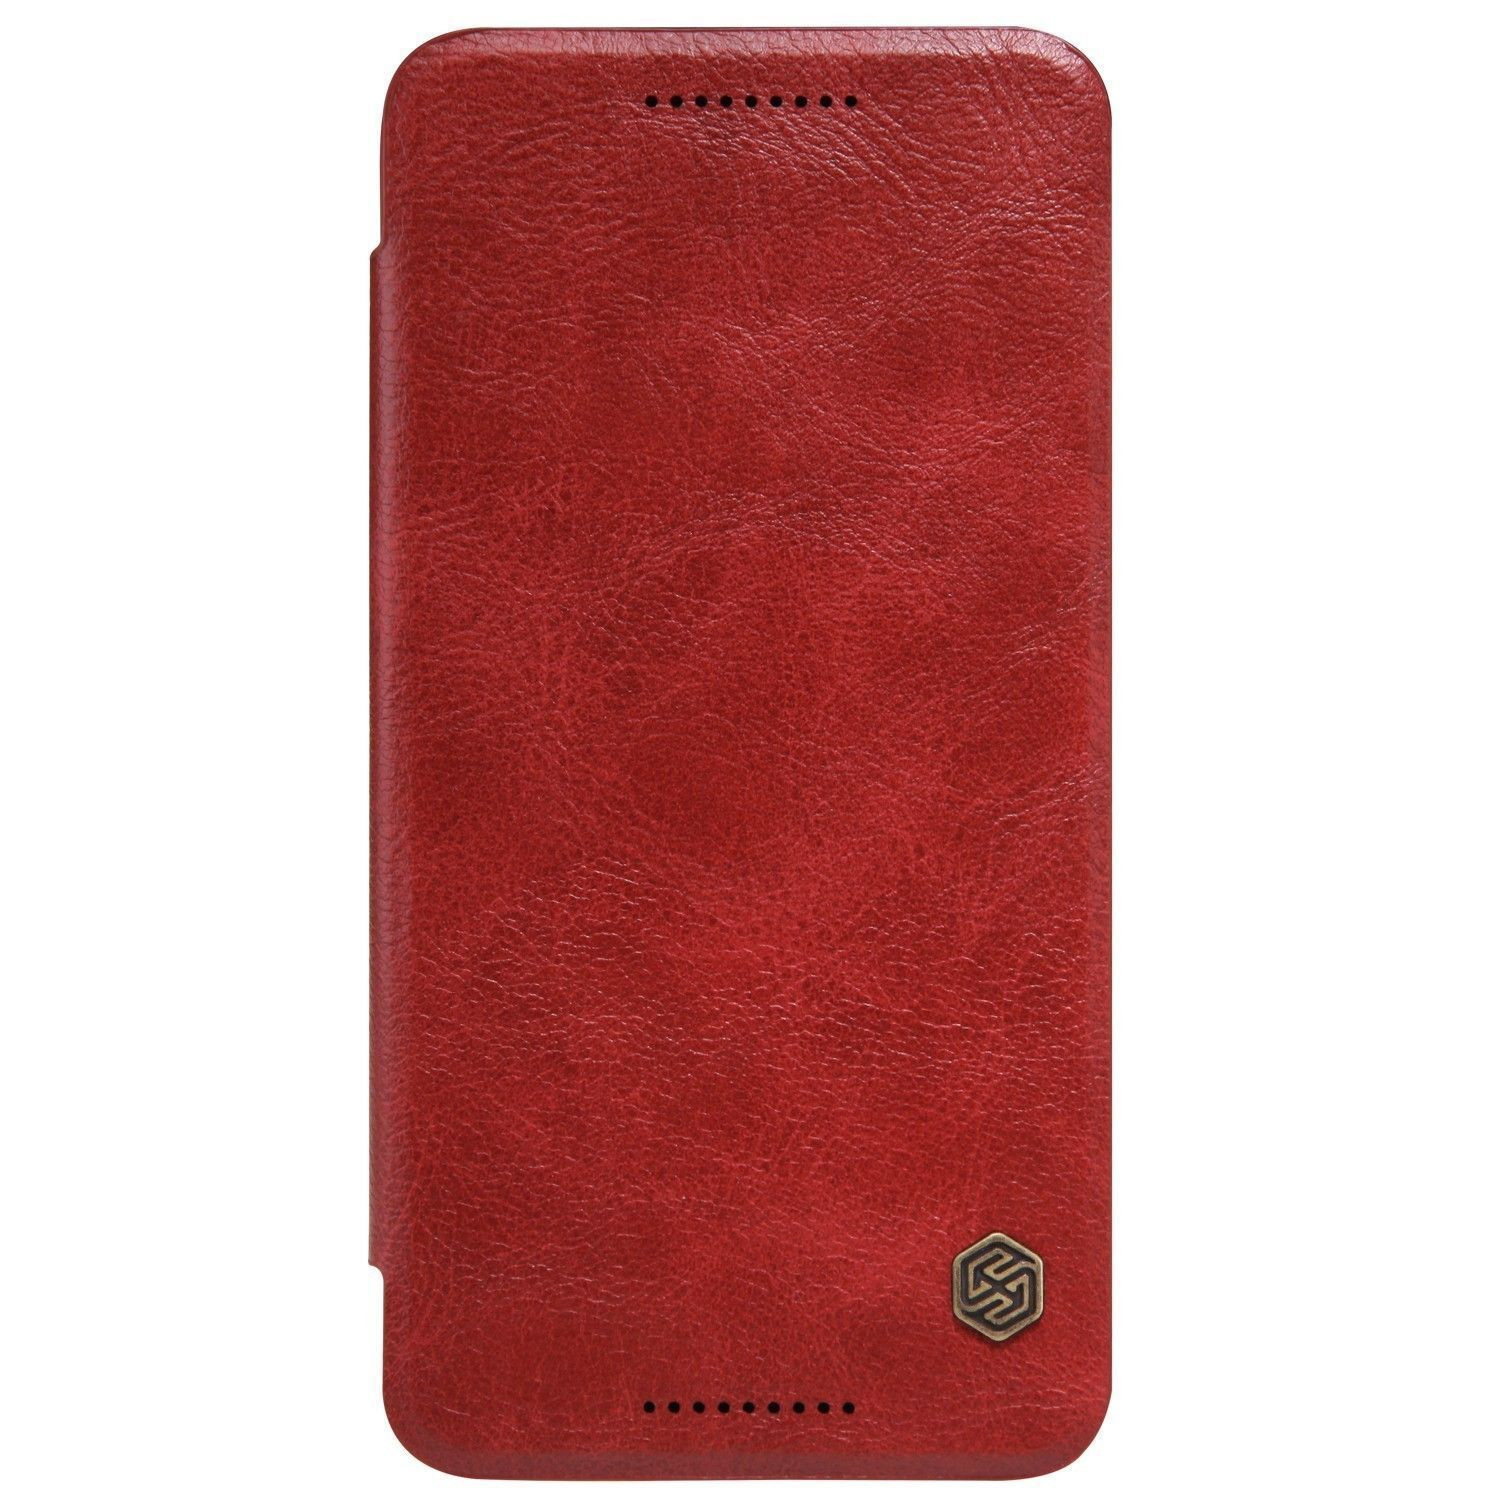 Nillkin ® LG Google Nexus 5X Nitq Folio Leather Protective ...